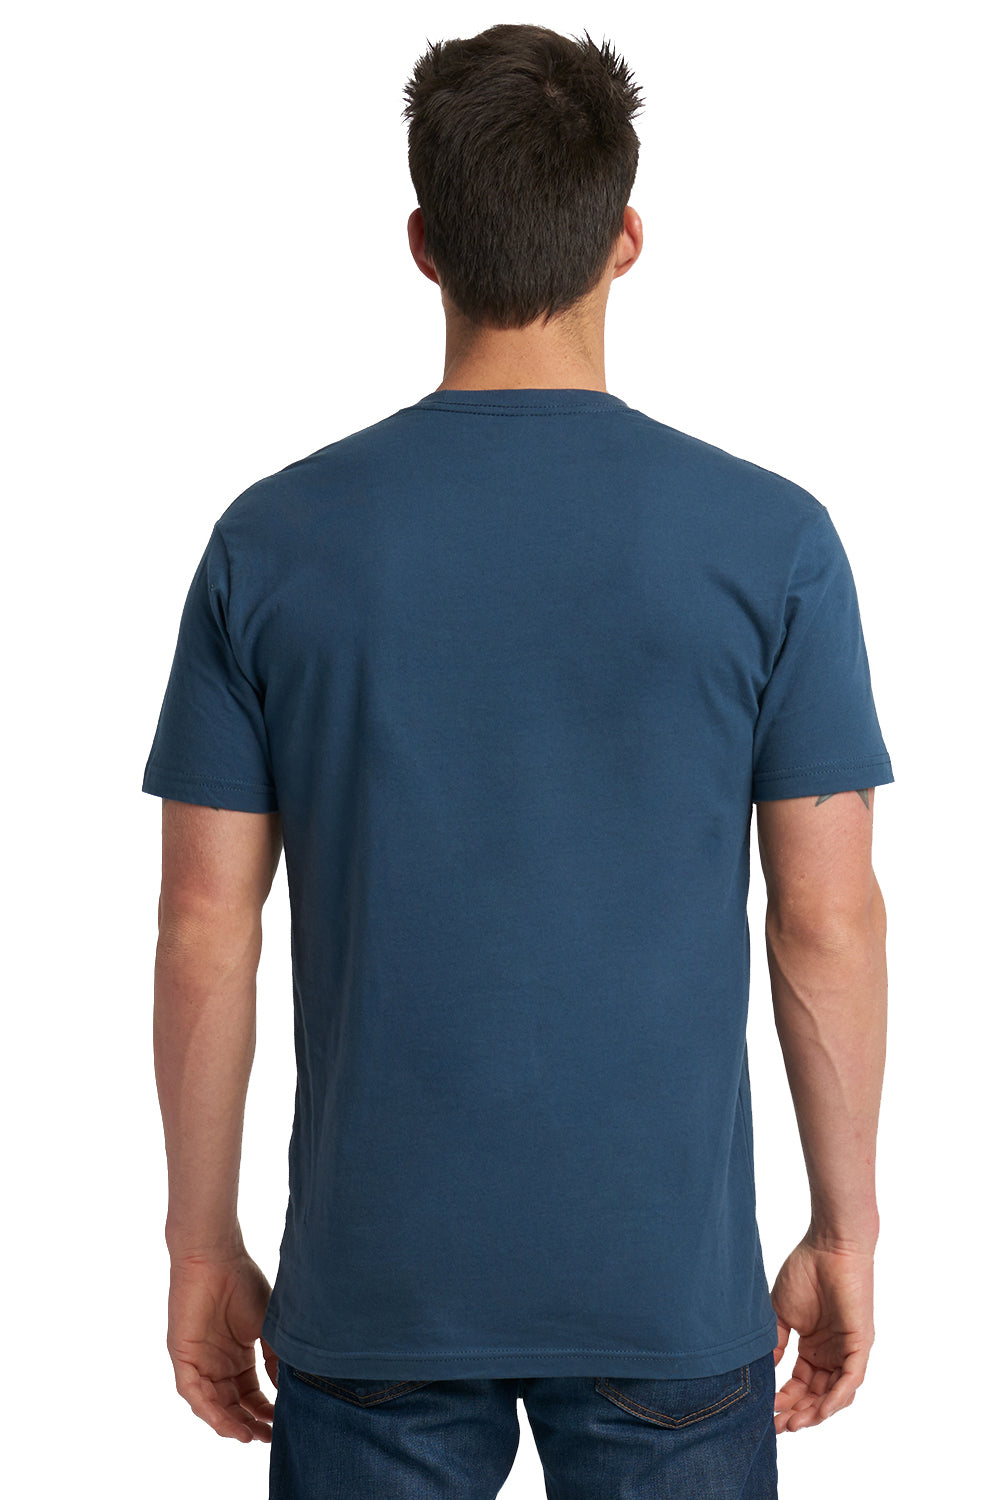 Next Level 3600 Mens Fine Jersey Short Sleeve Crewneck T-Shirt Indigo Blue Back